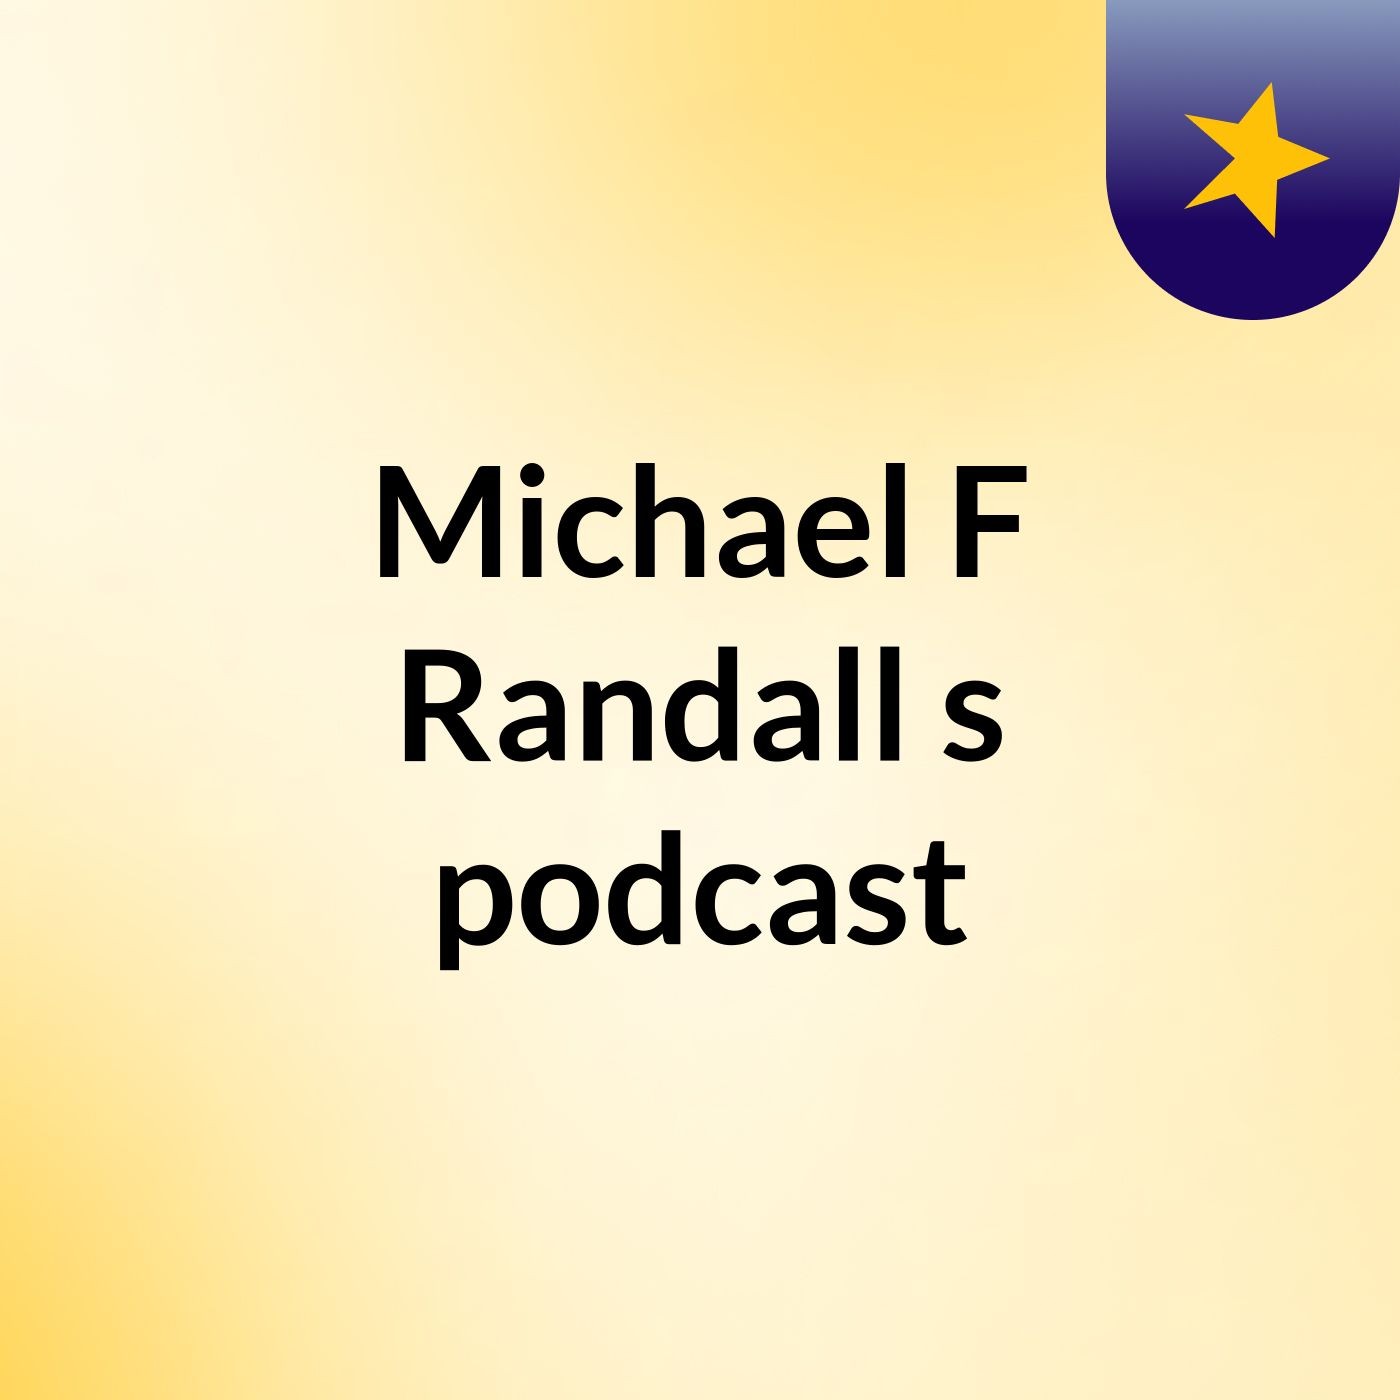 Michael F Randall's podcast